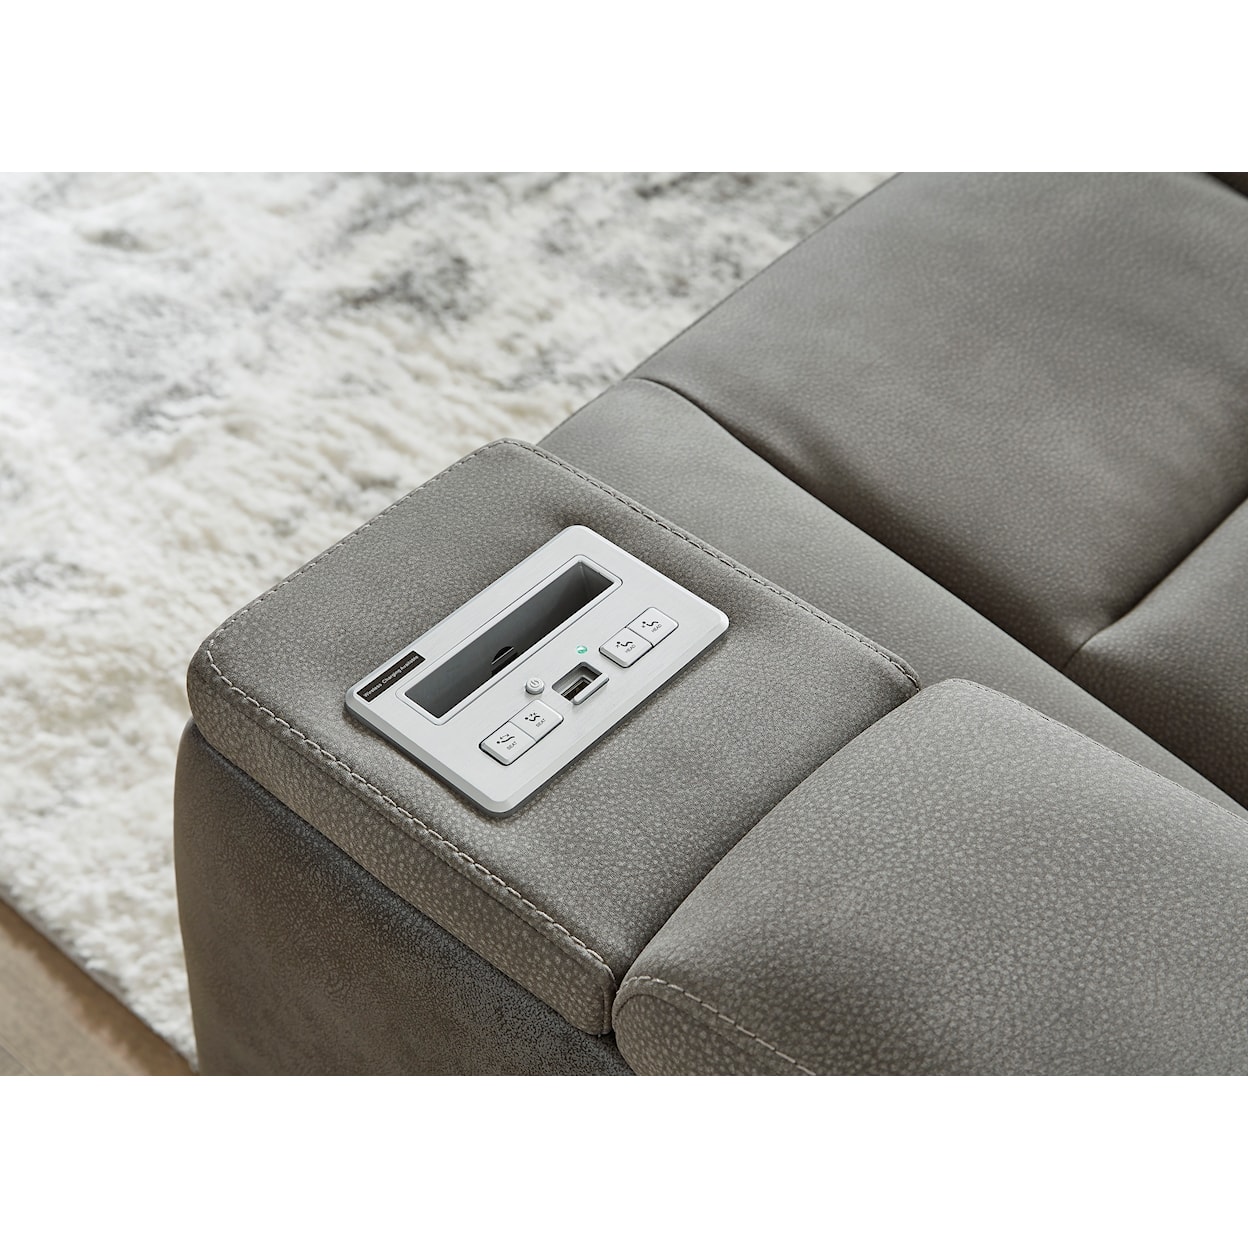 Ashley Furniture Signature Design Next-Gen DuraPella Power Recliner